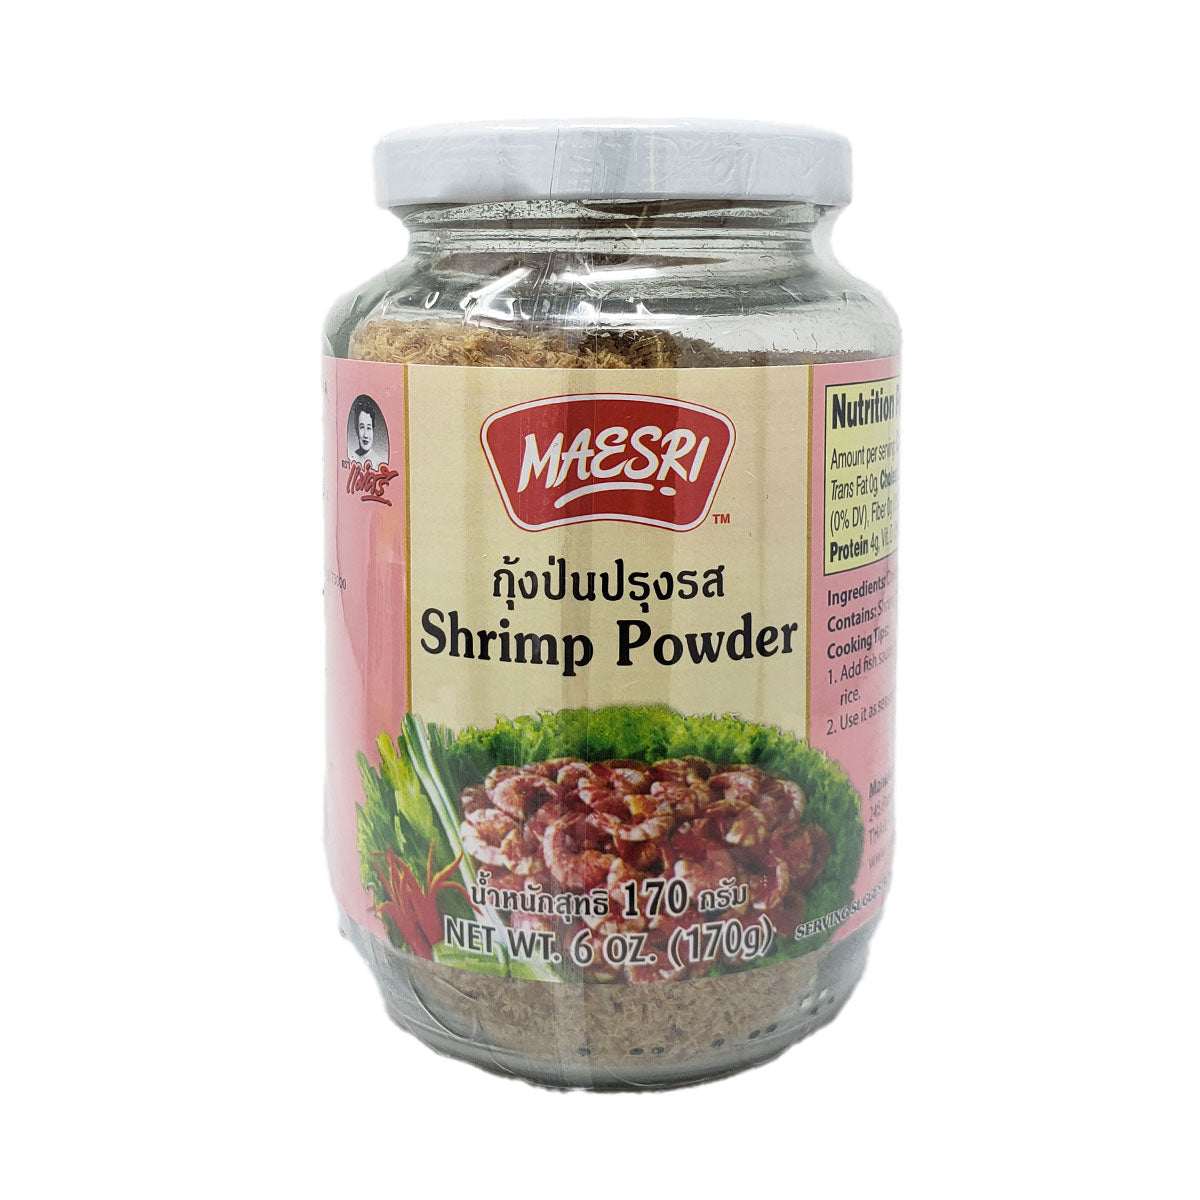 Maesri Shrimp Powder, 6oz